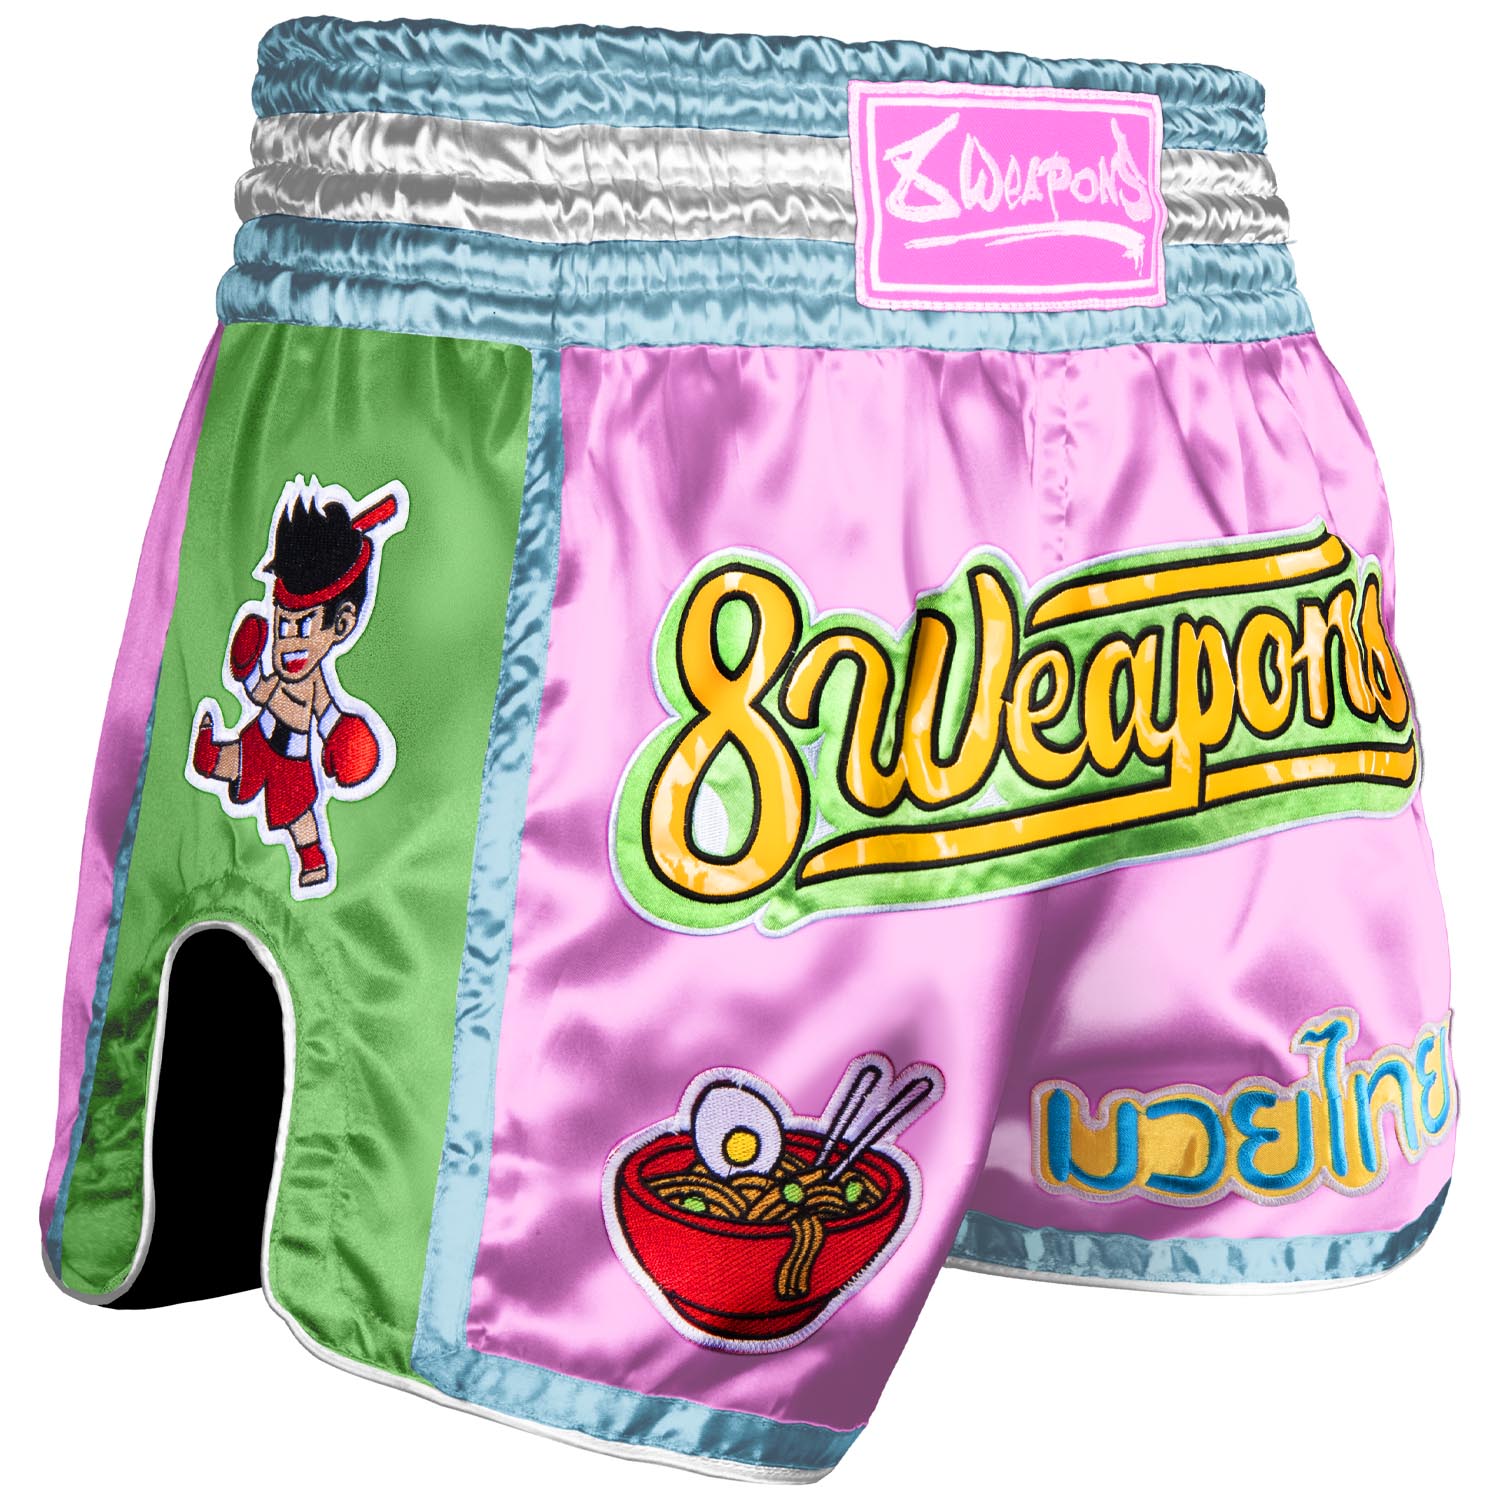 8 WEAPONS Muay Thai Shorts, Yummy, pink